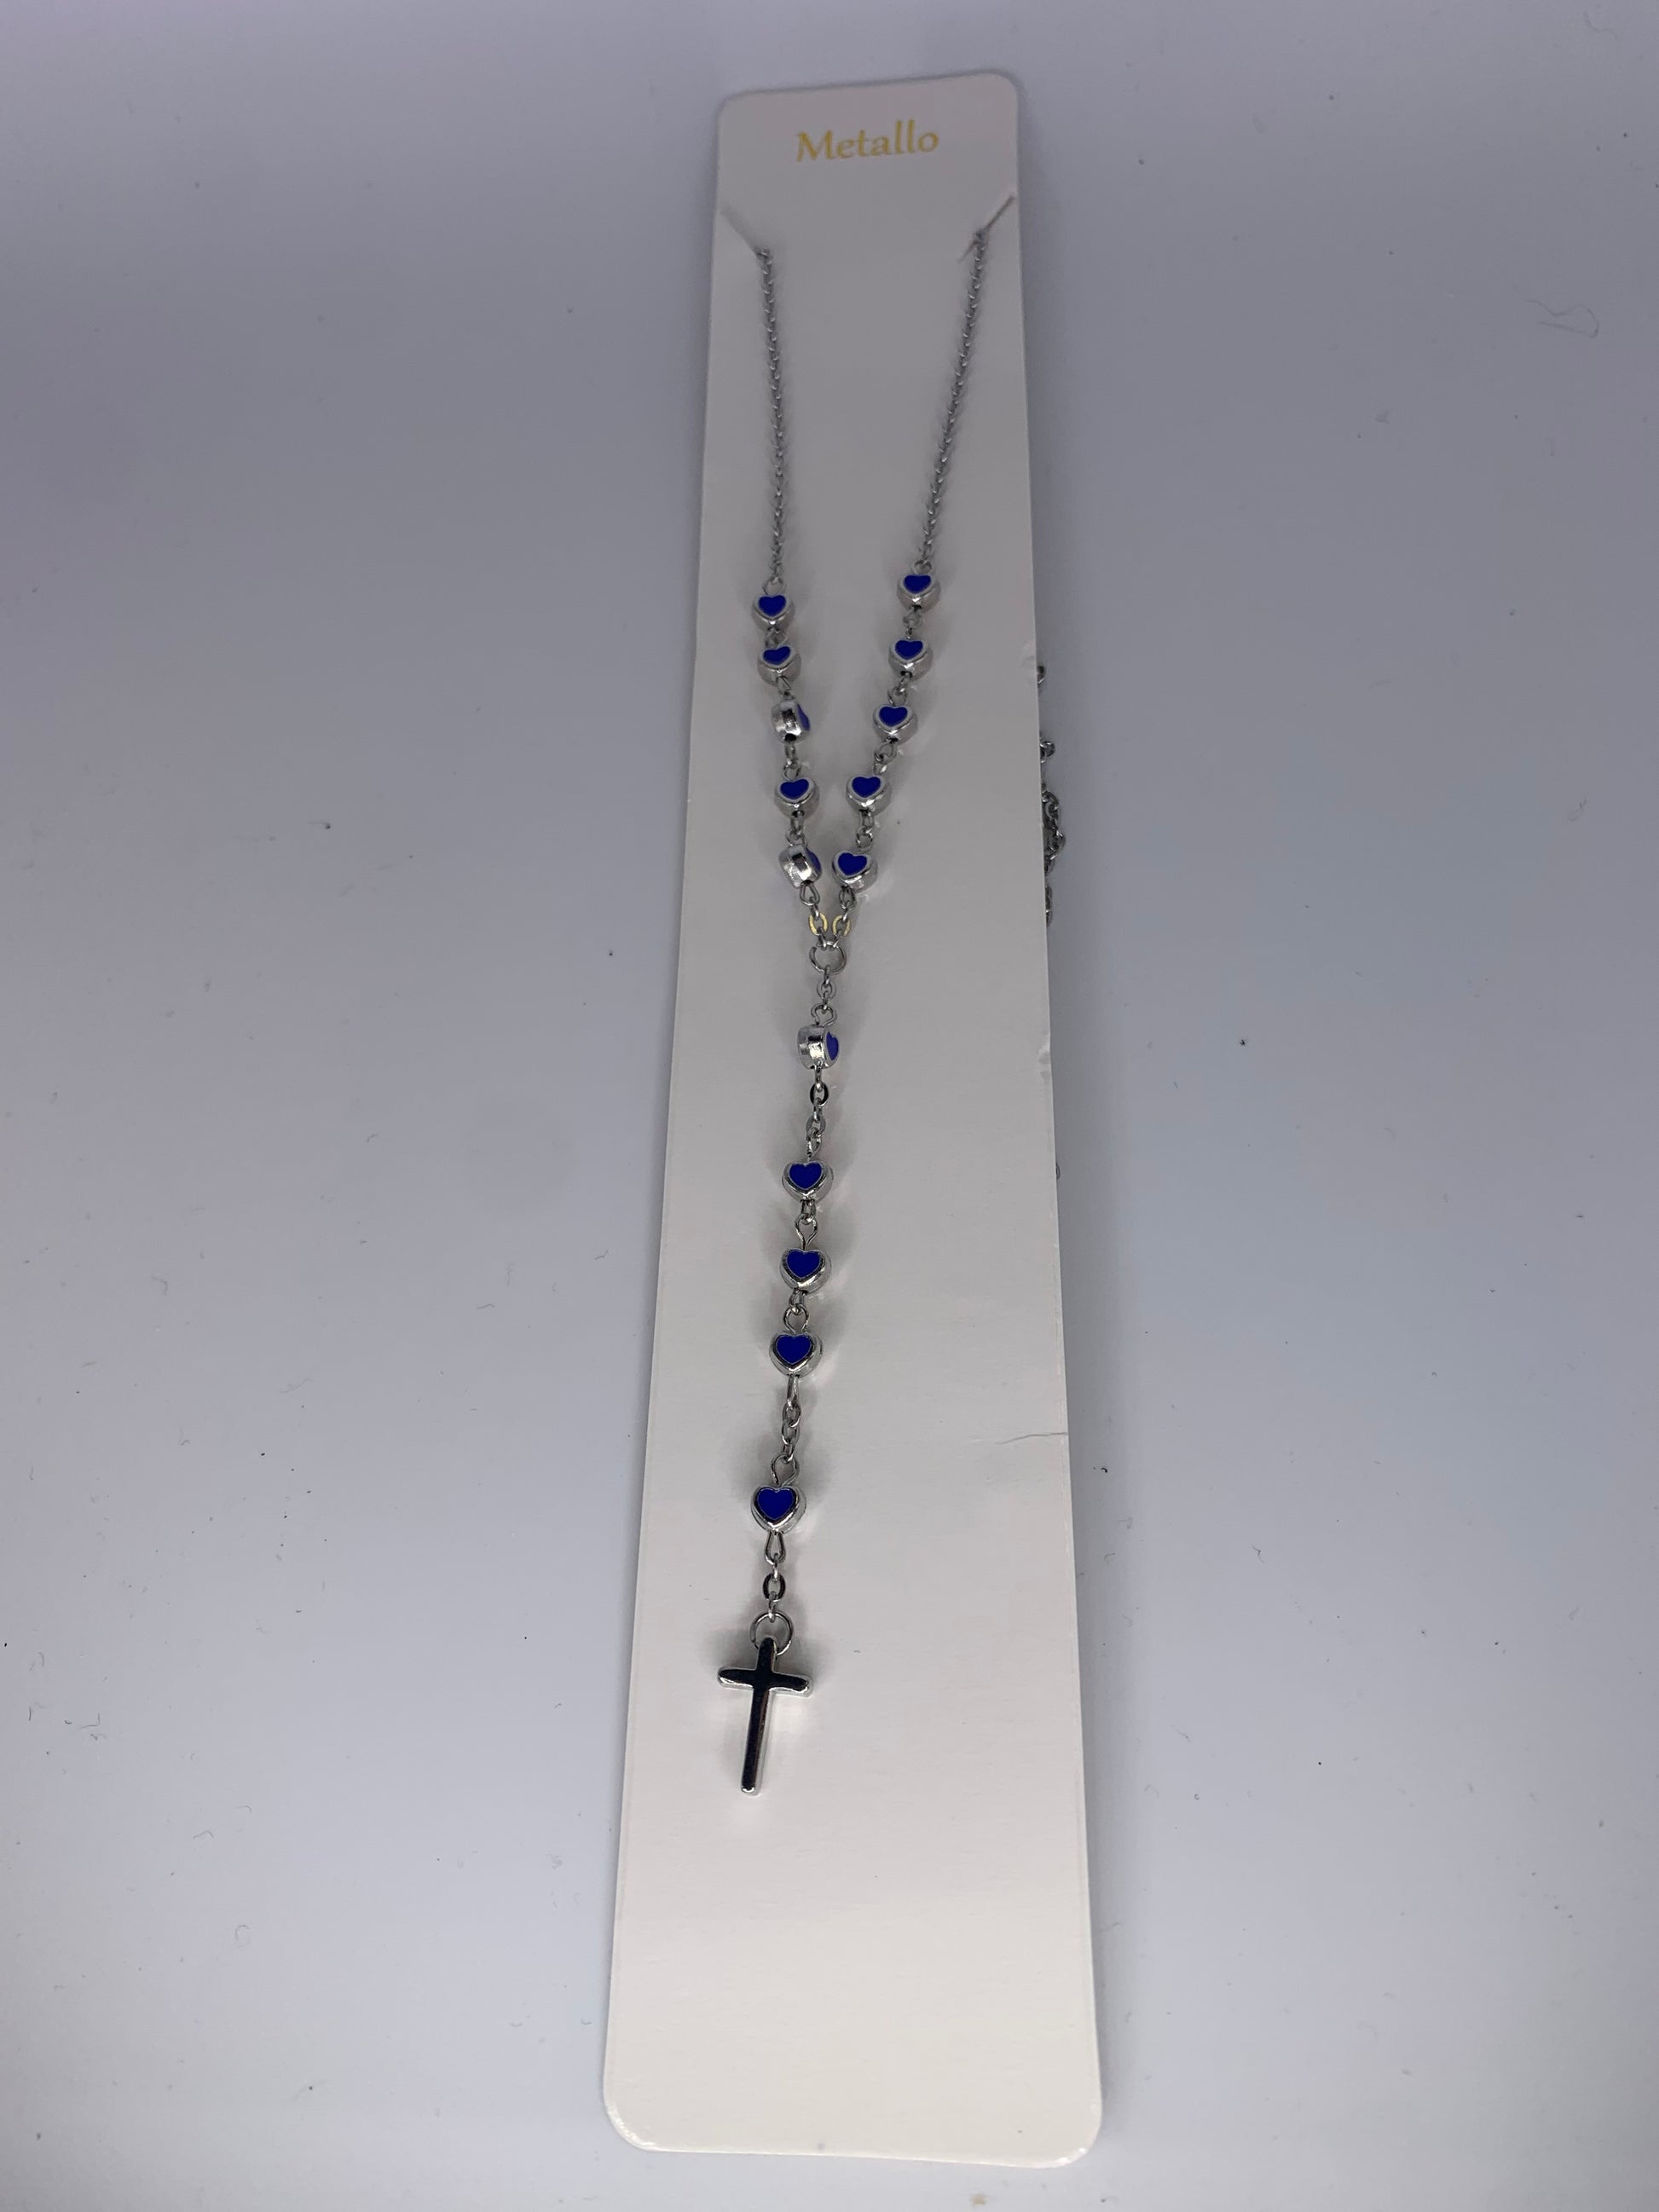 Prayer beads rosary devotional